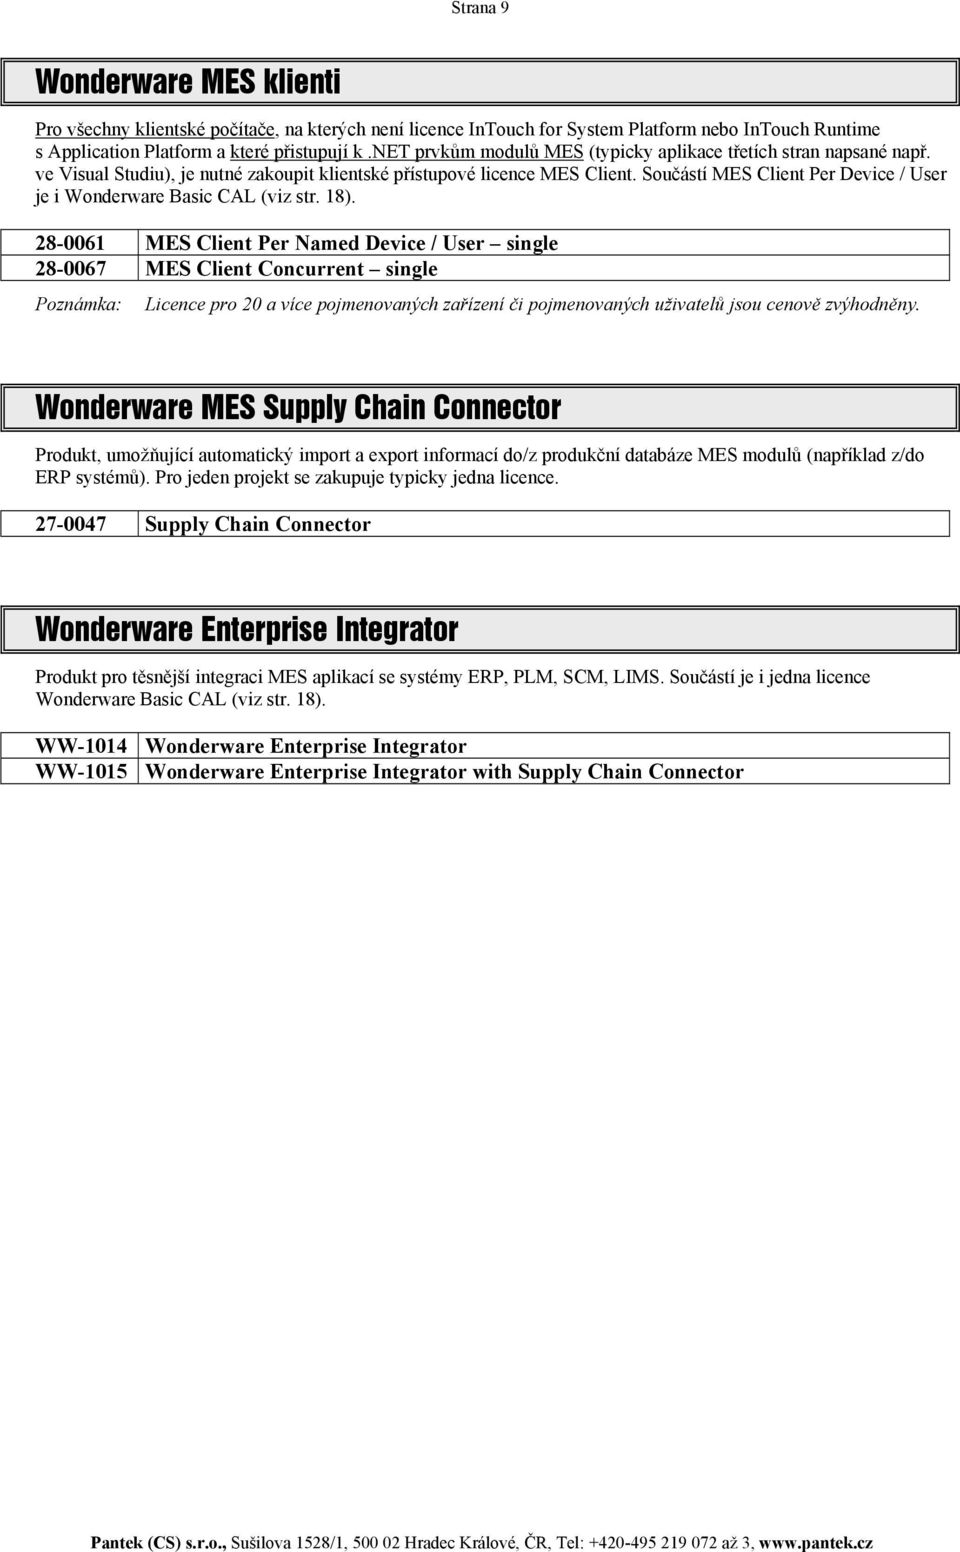 Součástí MES Client Per Device / User je i Wonderware Basic CAL (viz str. 18).